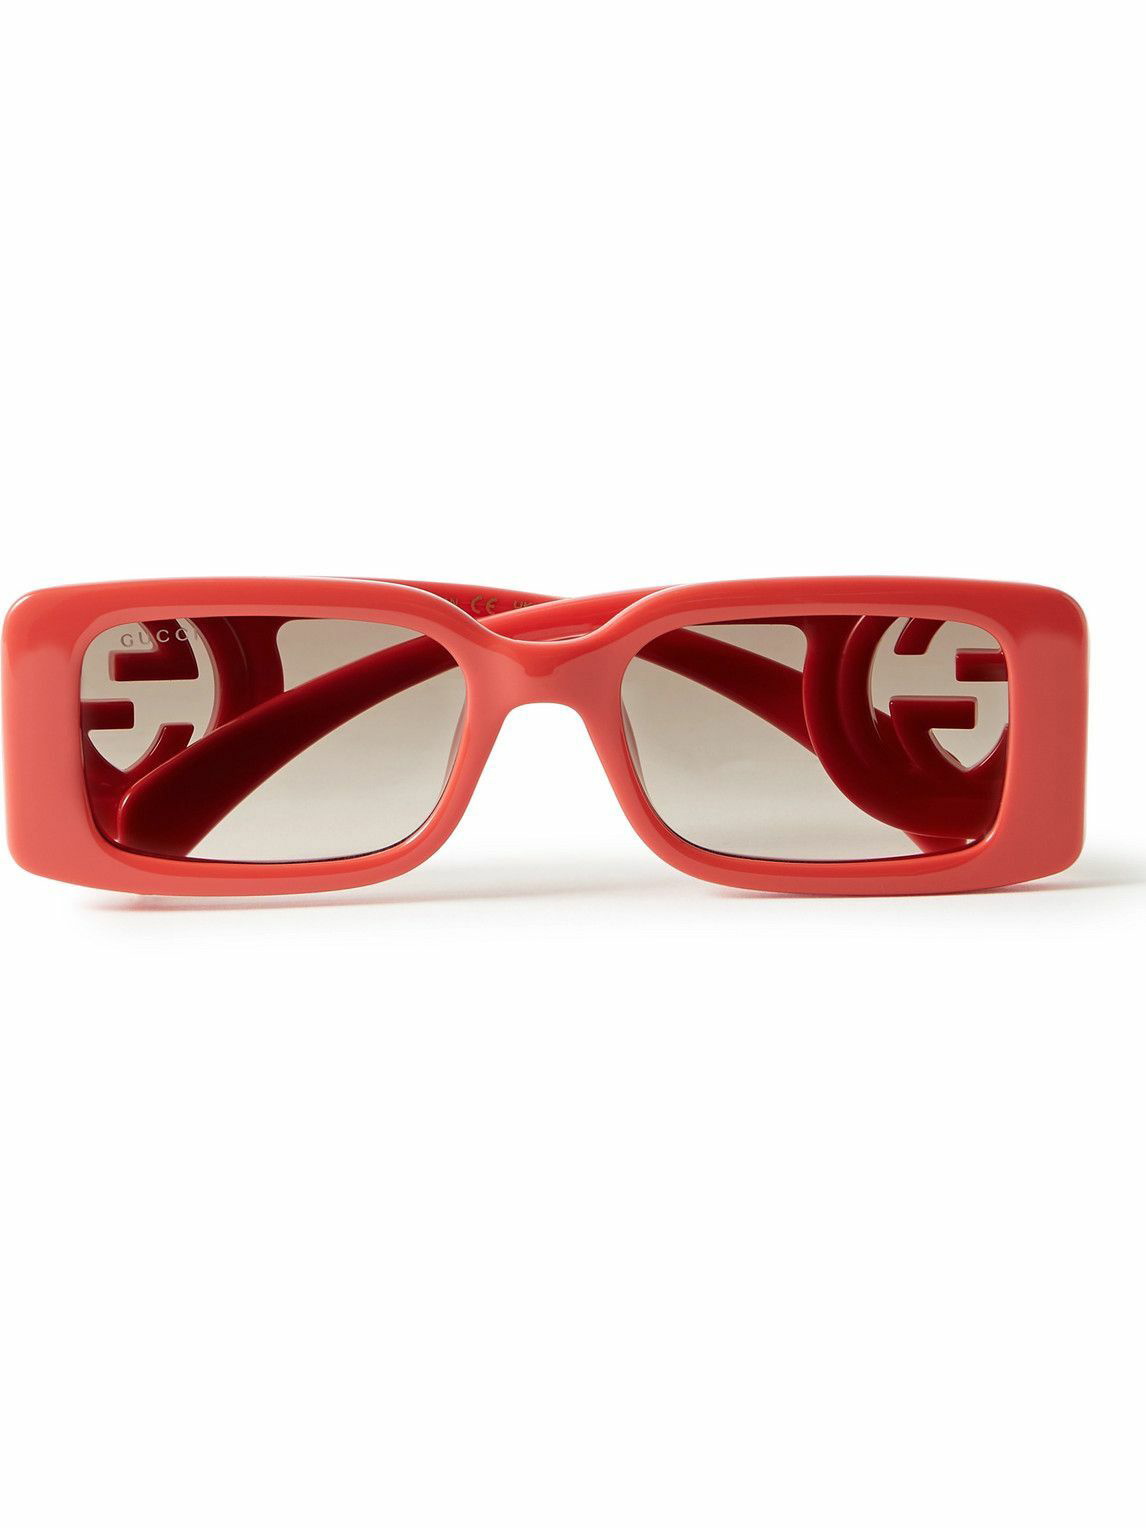 Gucci Eyewear - Rectangular-Frame Acetate Sunglasses Gucci